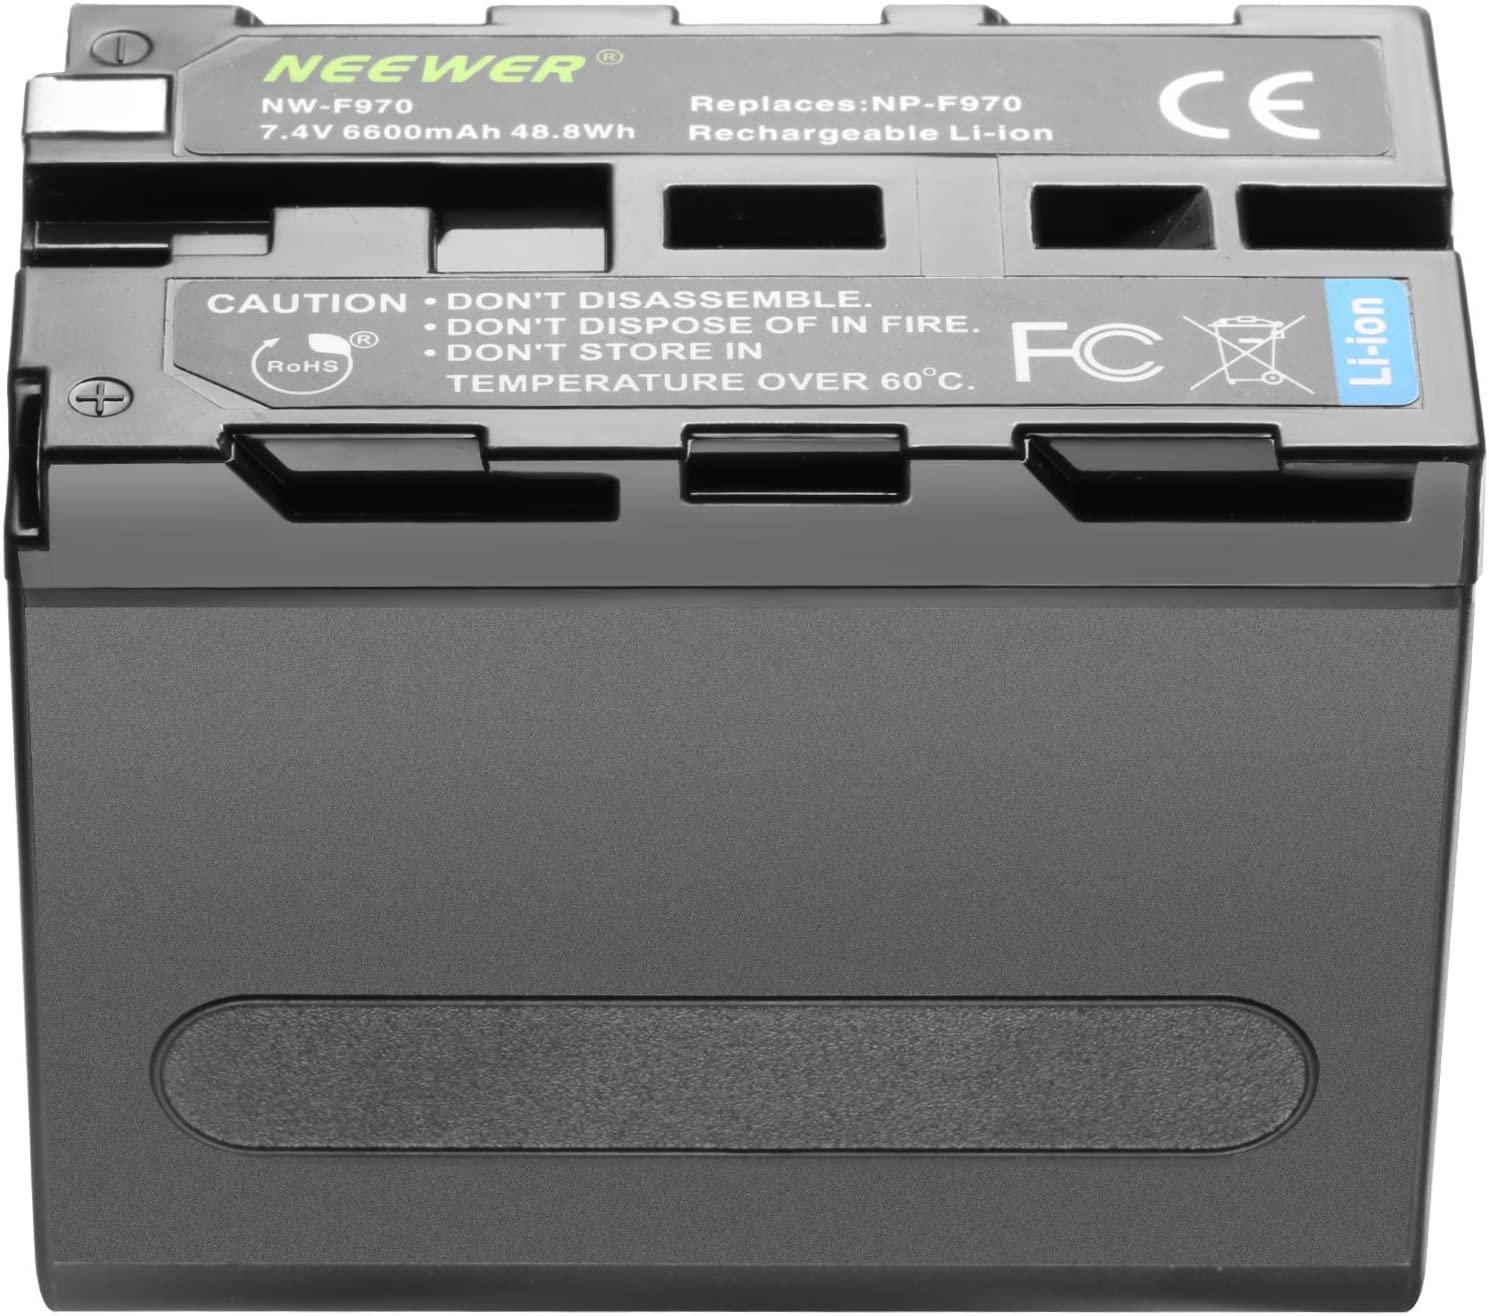 Acumulator premium Neewer tip Sony NP-F970, 6600 mAh Li-ION